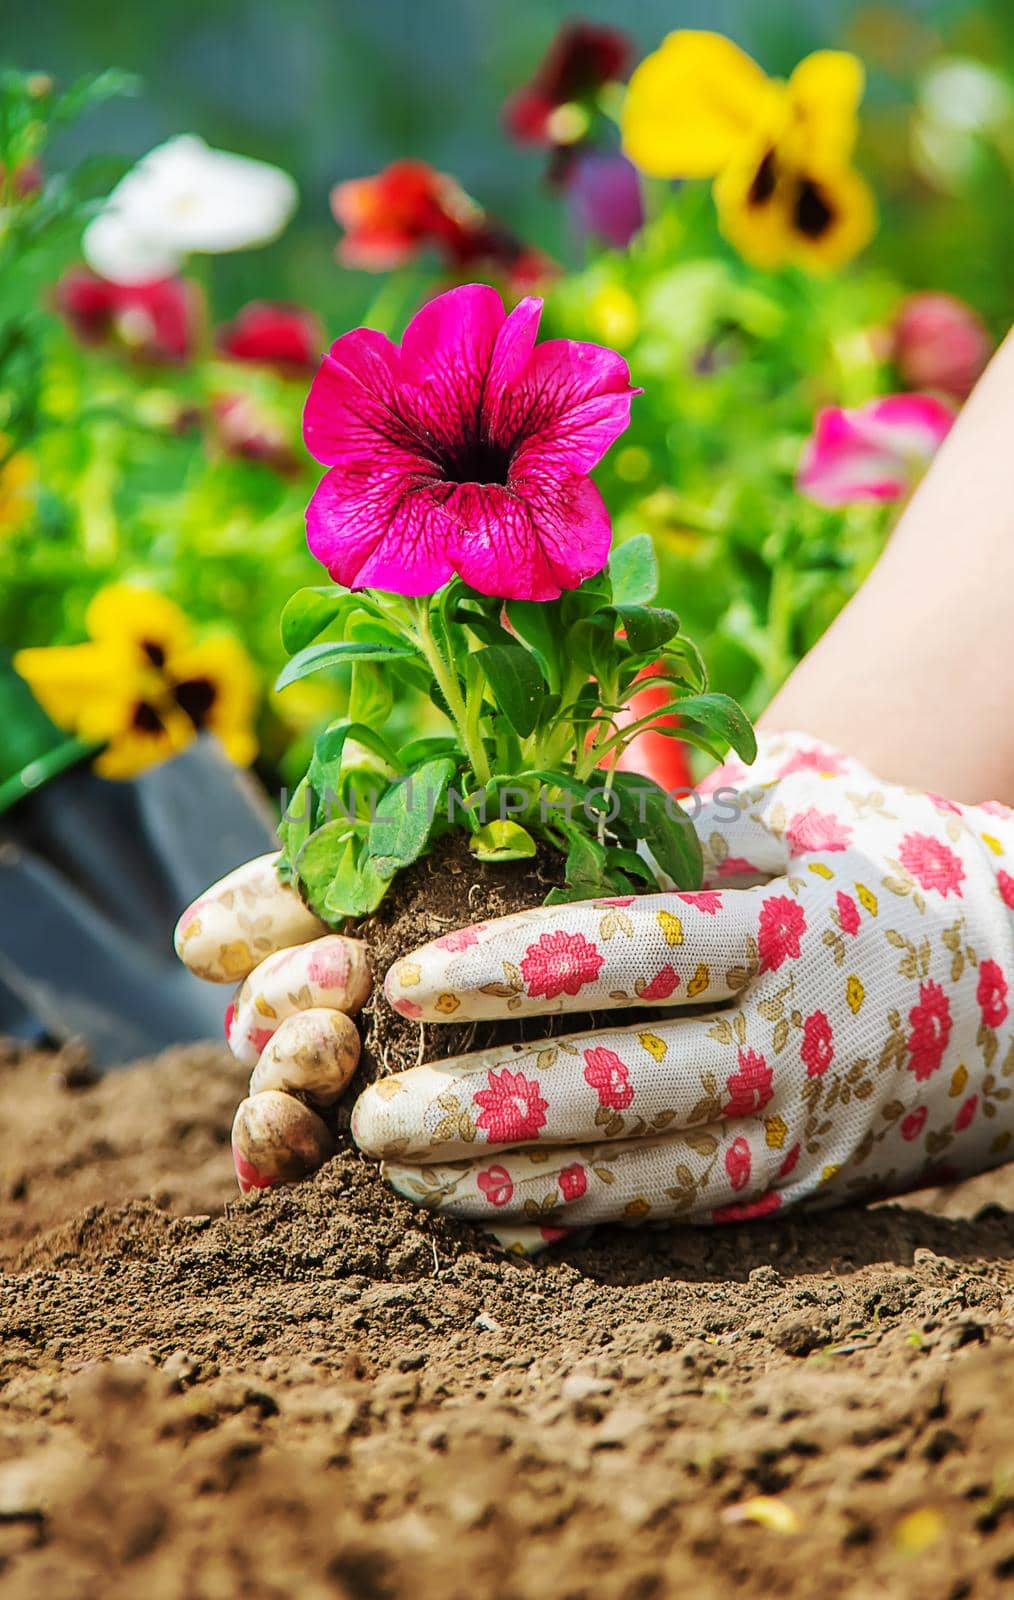 The gardener is planting a flower garden. Selective focus. by yanadjana